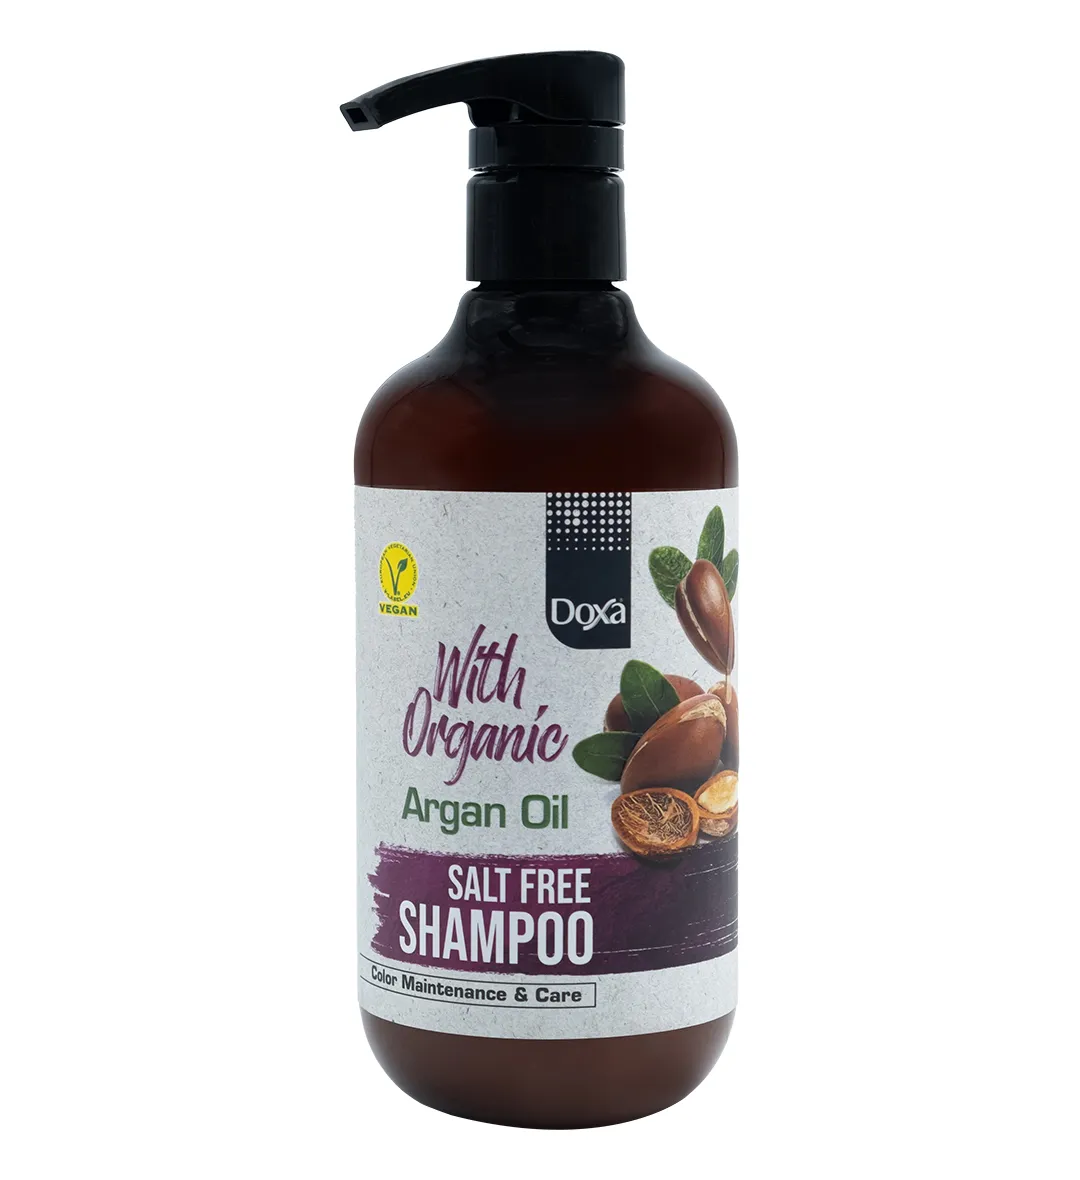 Doxa 500 Ml Salt Free Shampoo With Organic Argan Oil - Color Maintenance & Care